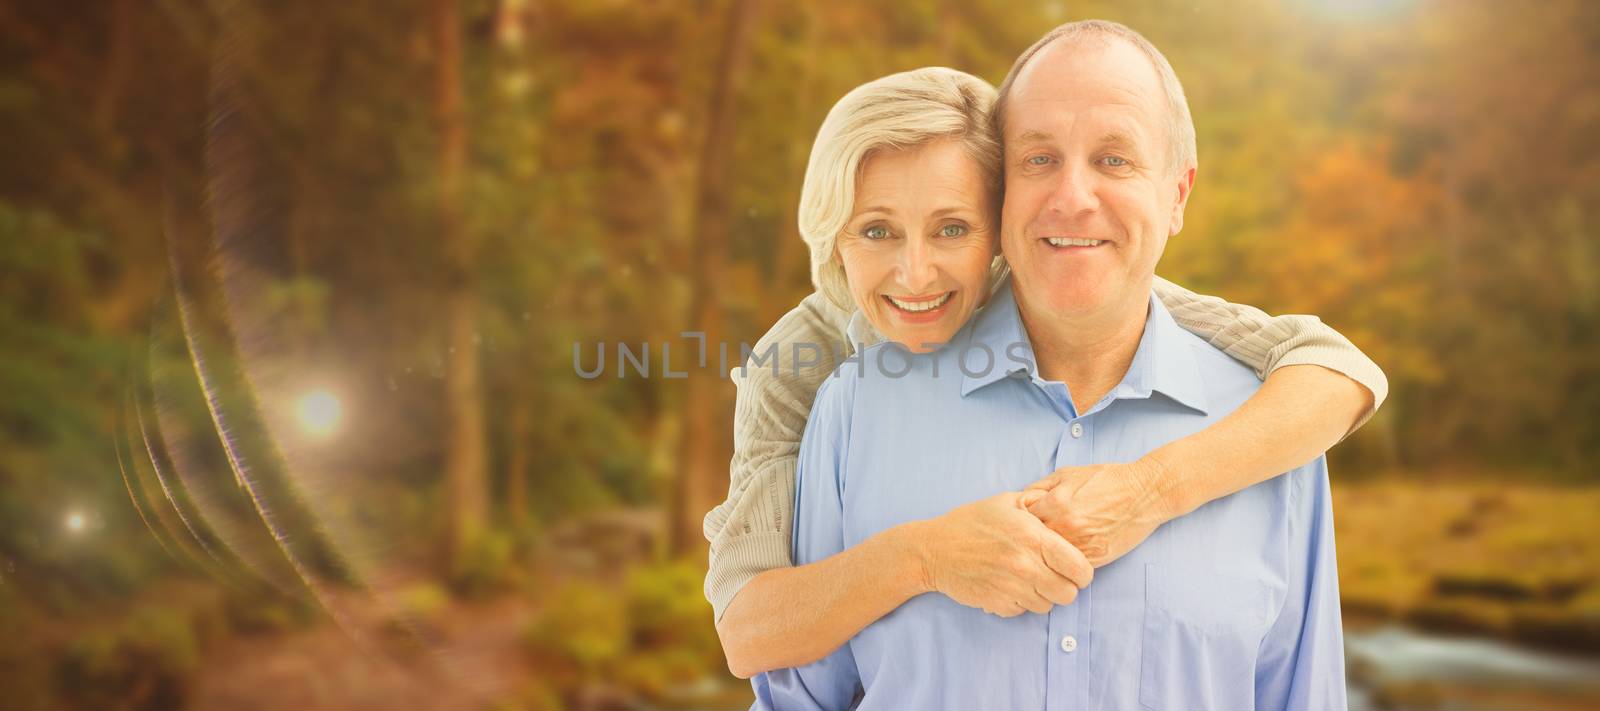 Happy mature couple embracing smiling at camera against autumn scene